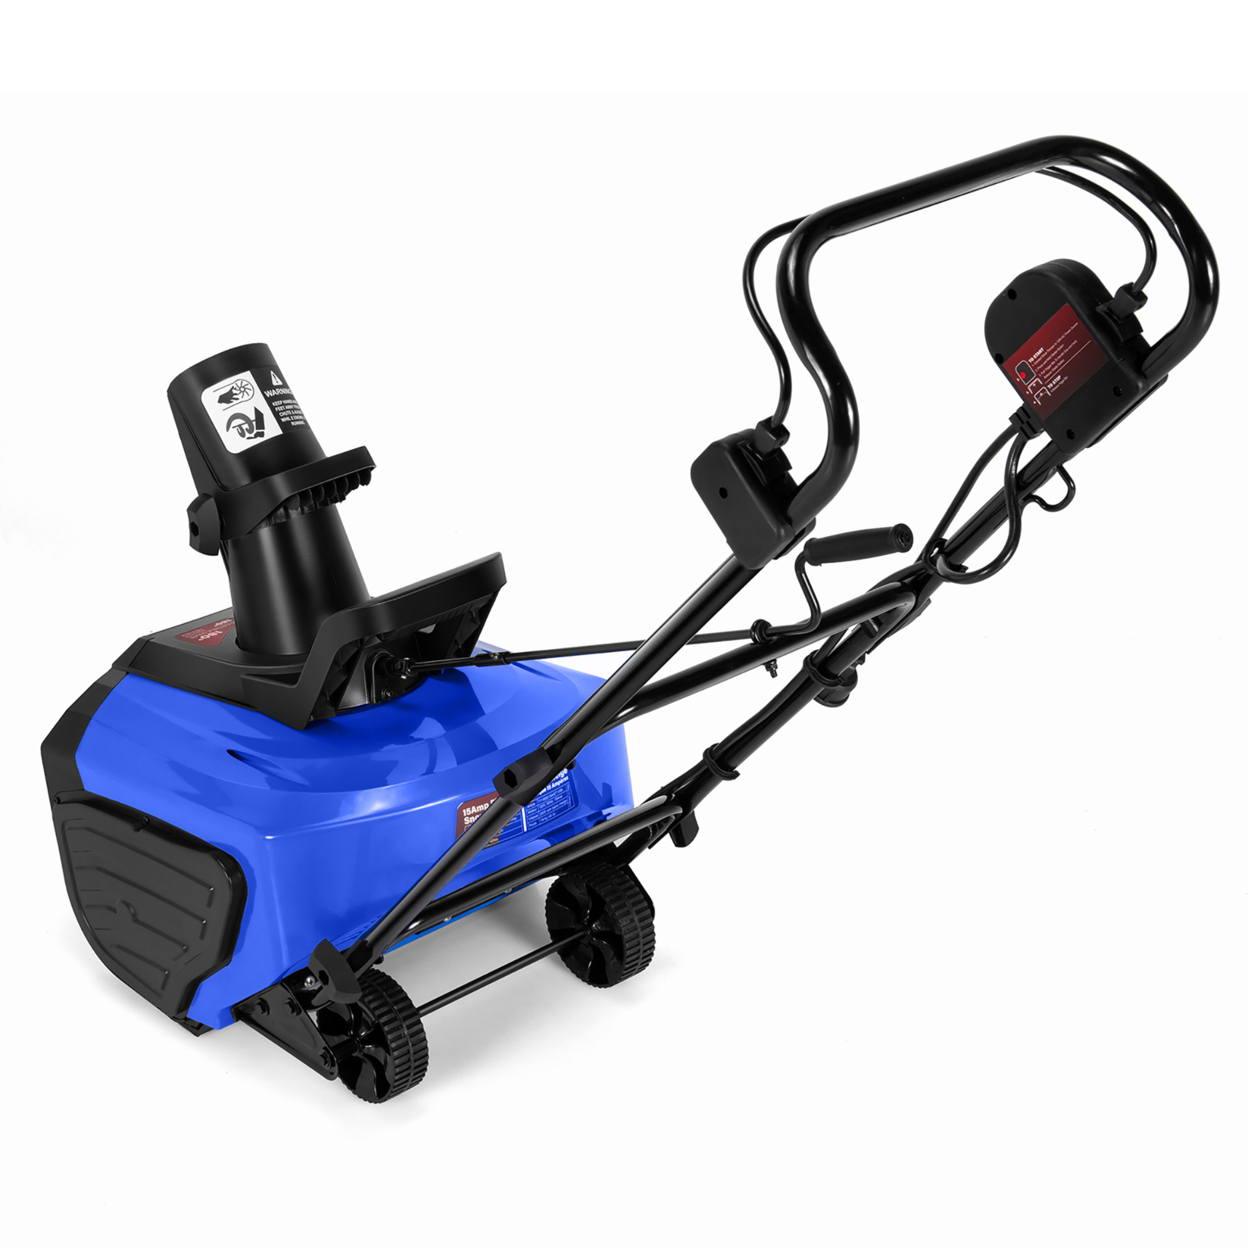 15Amp Corded Snow Blower w/ 180Â°Chute Rotation & 2 Transport Wheels Red\\Blue - black